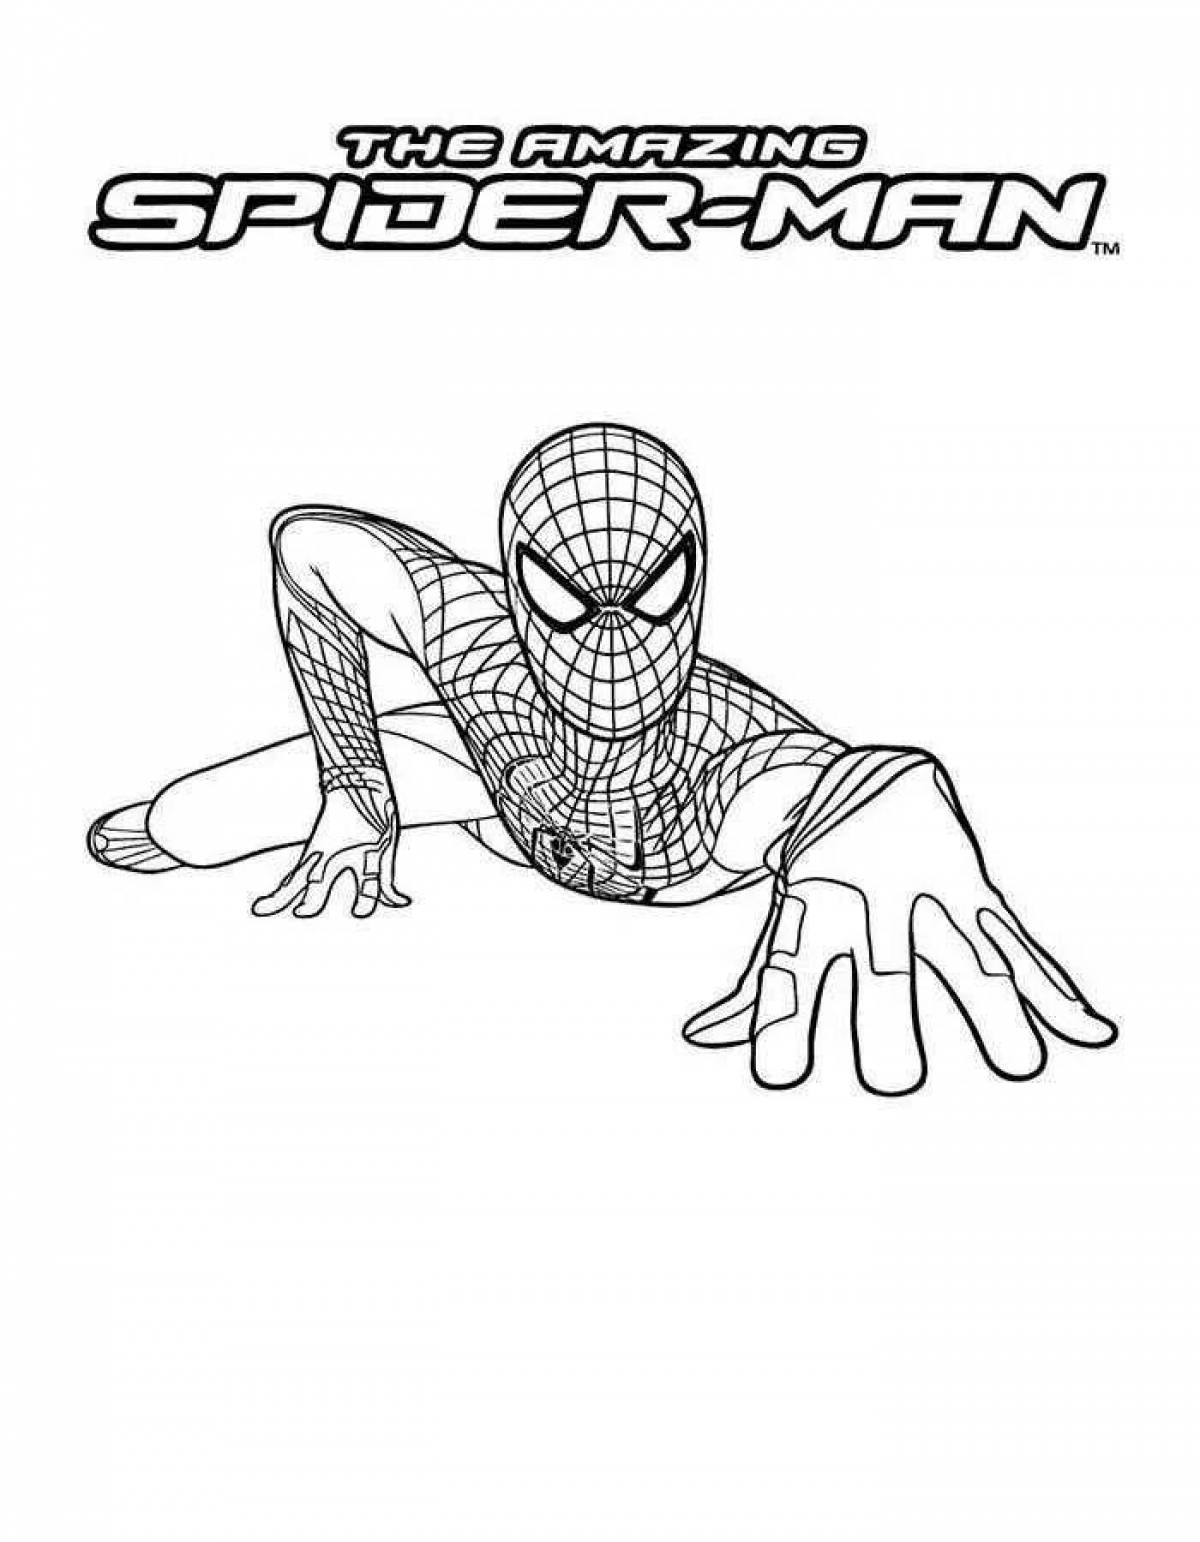 New spiderman #5